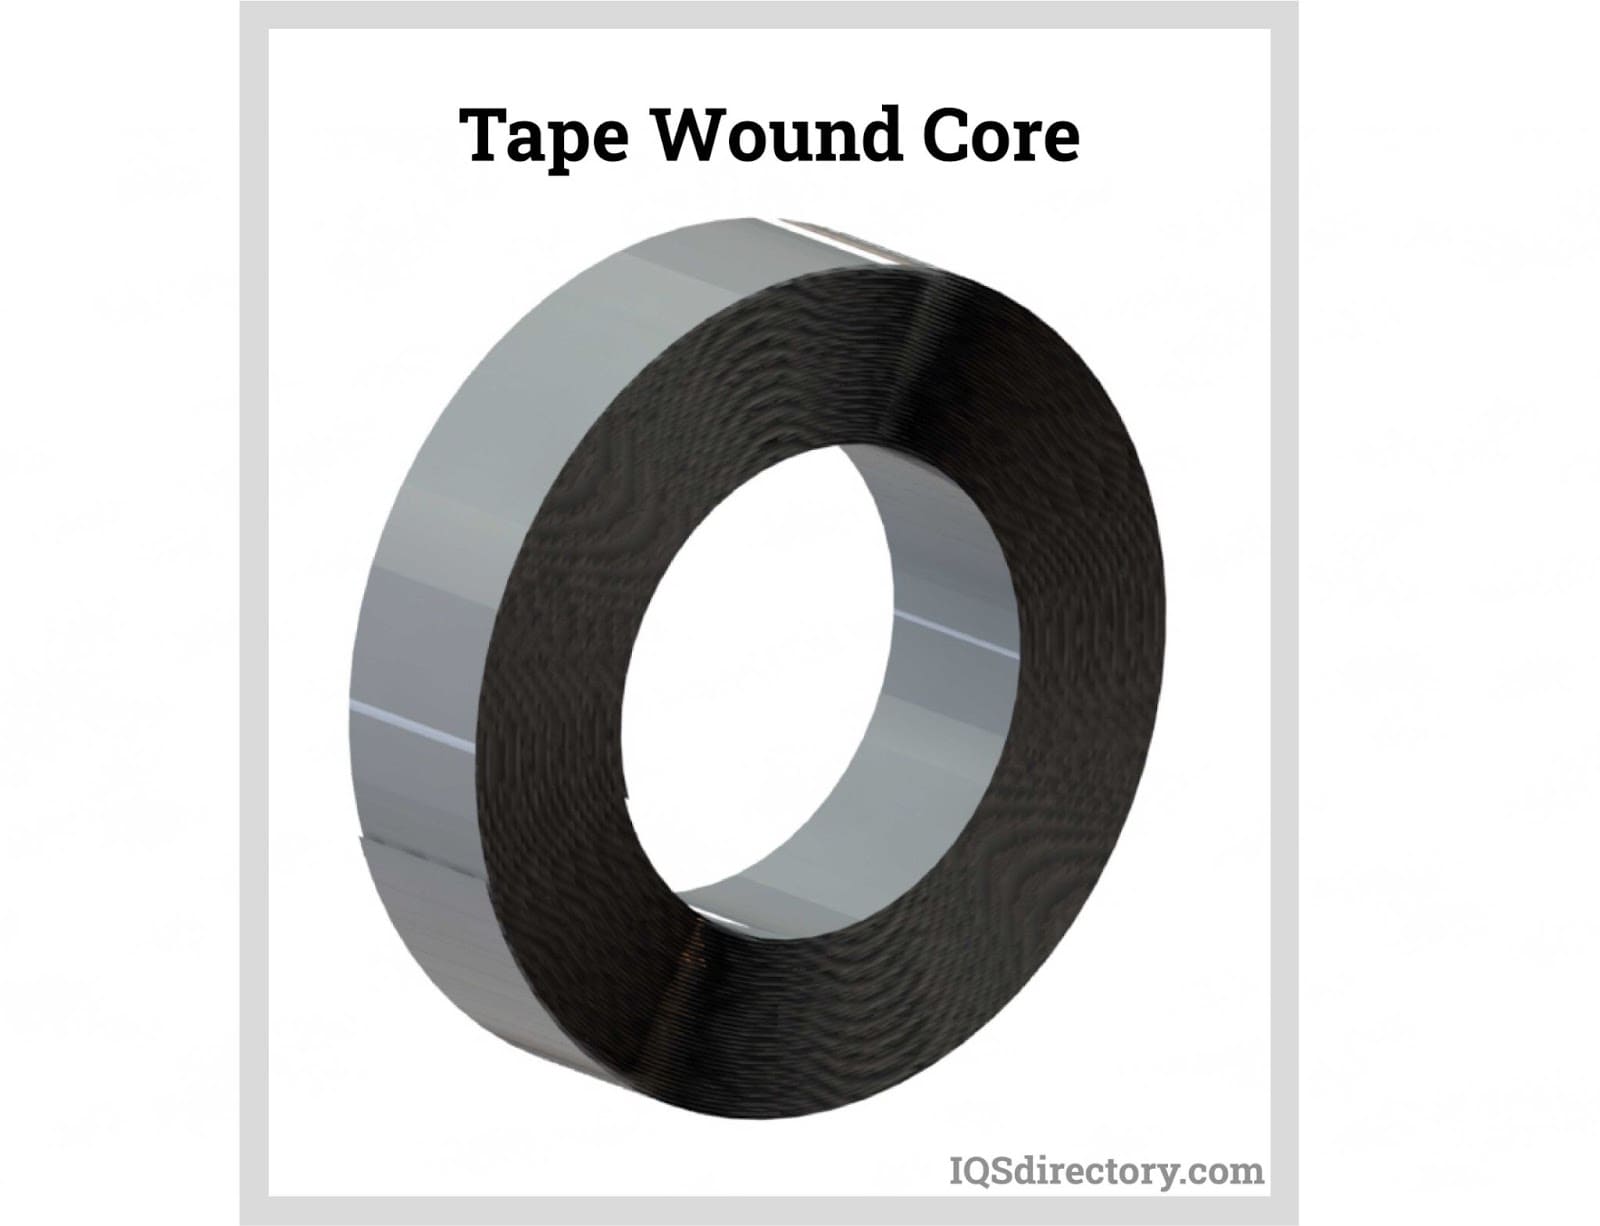 Tape Wound Core